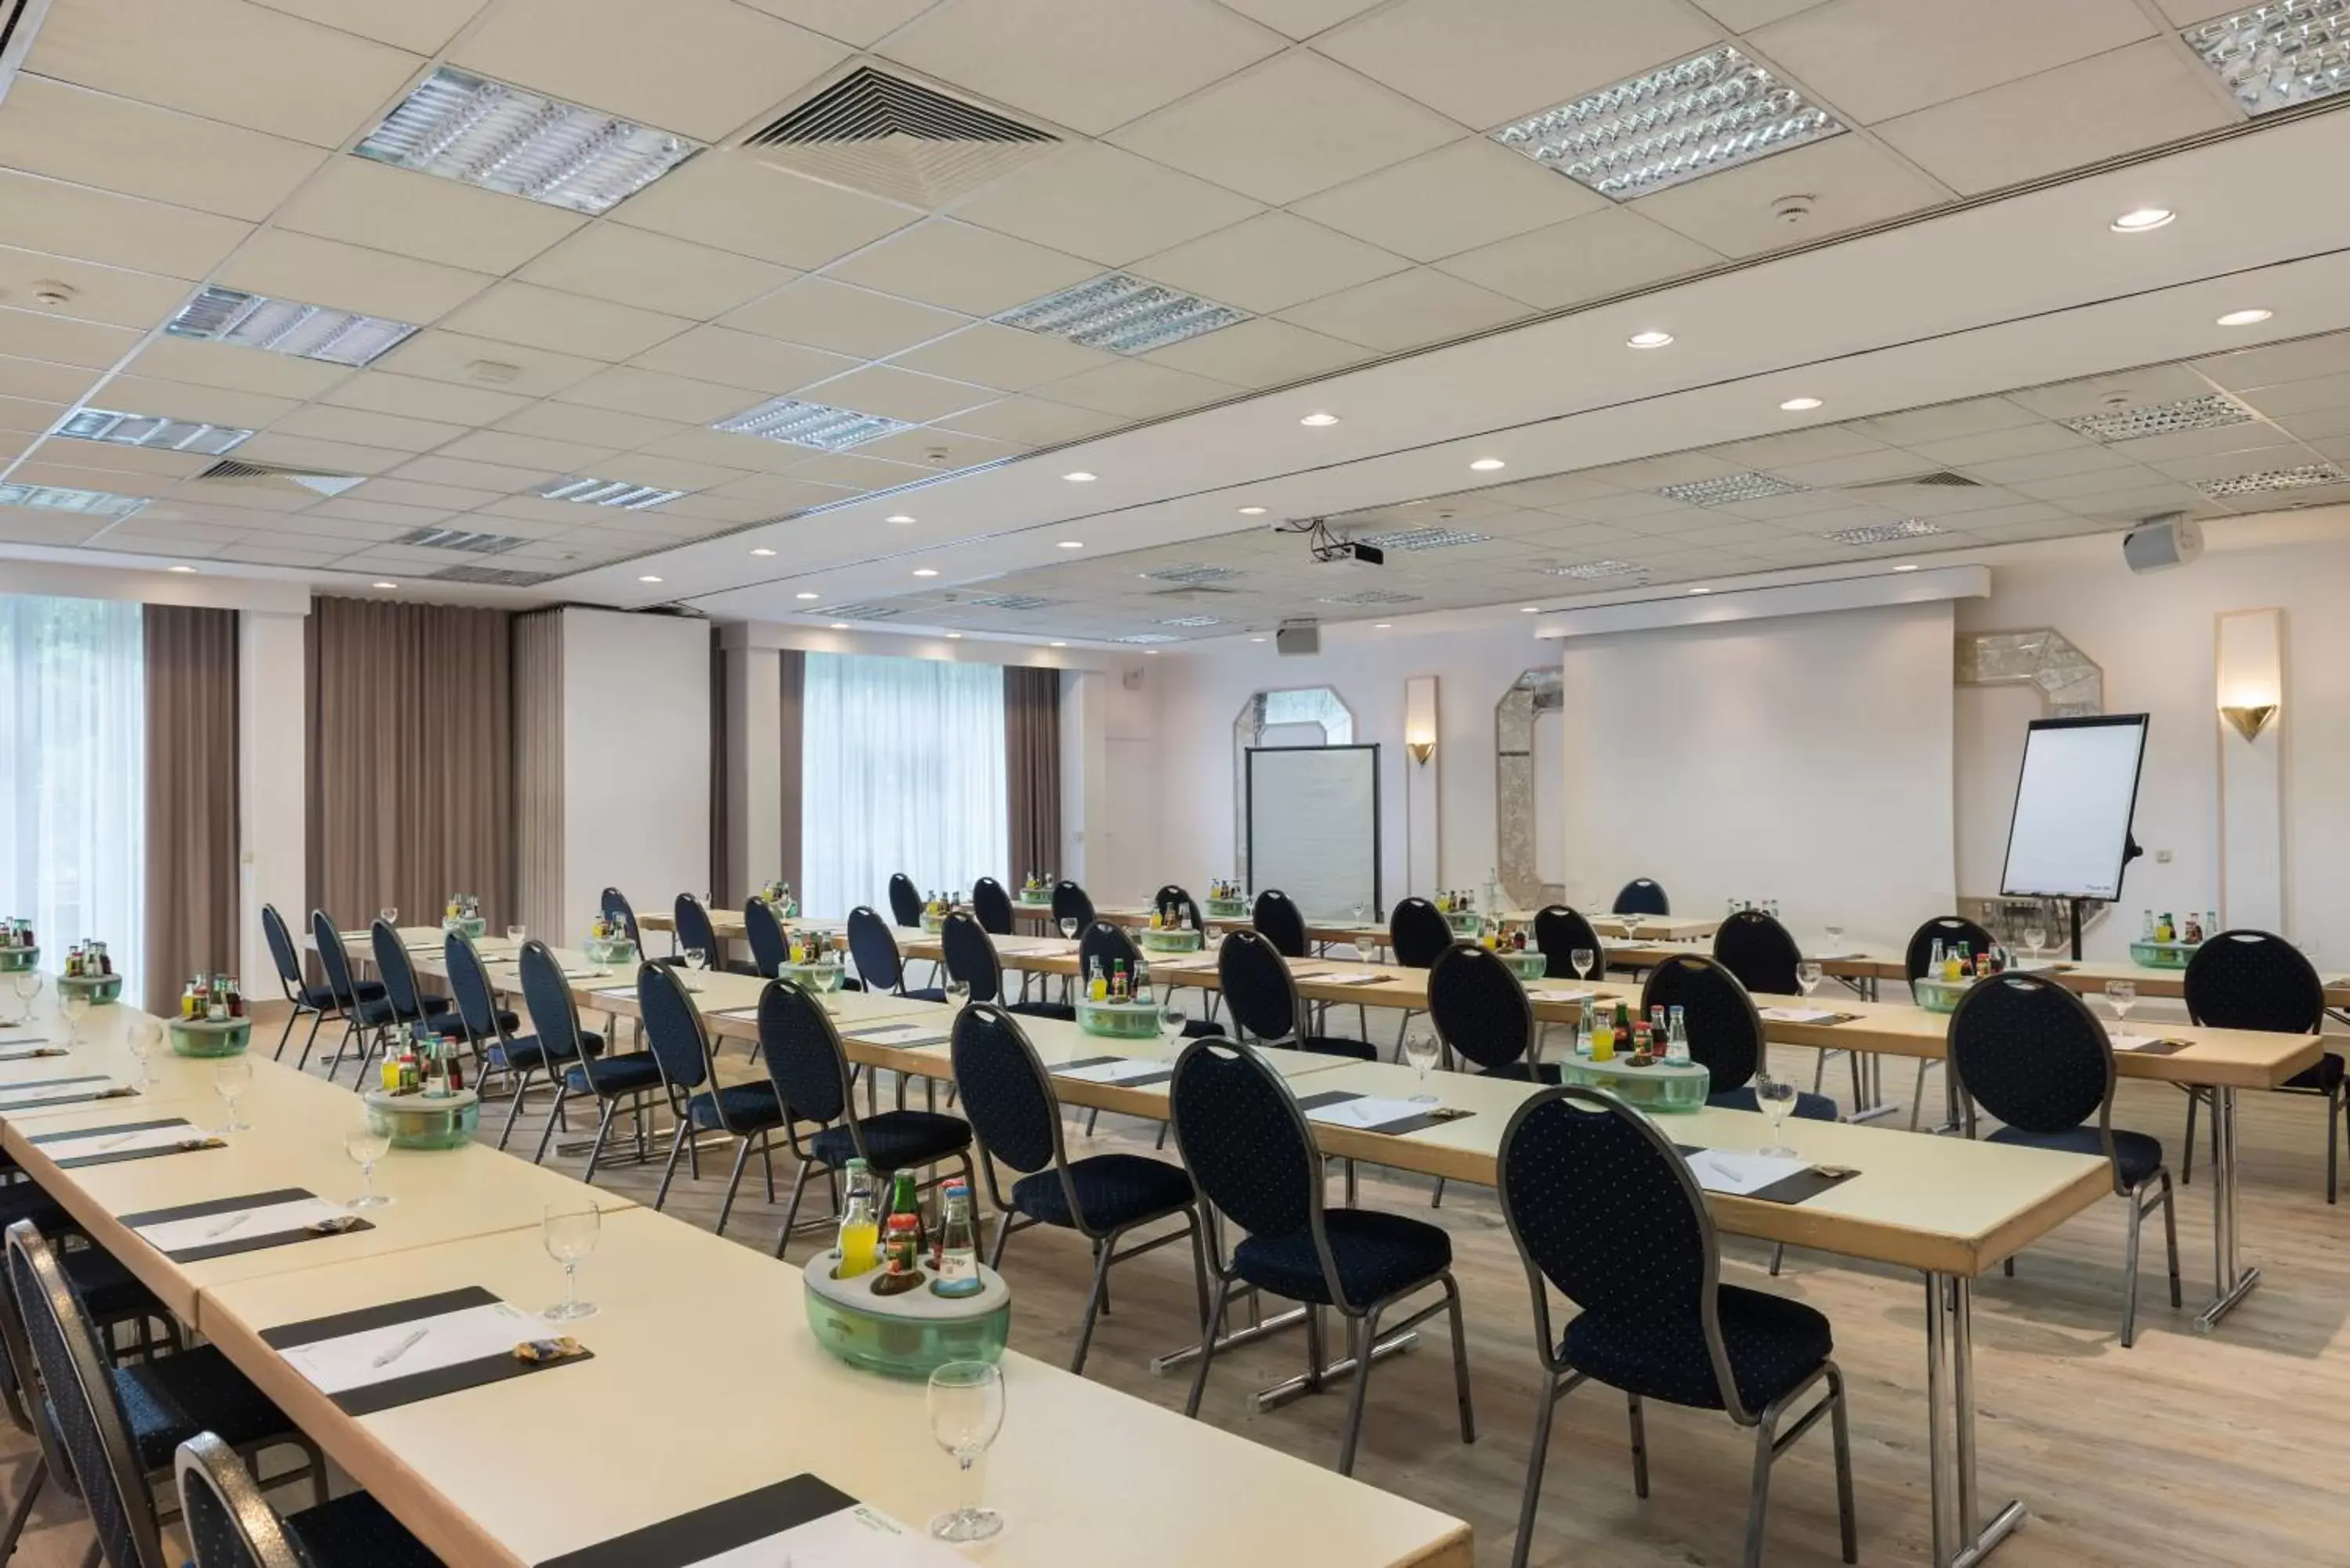 Meeting/conference room in Wyndham Garden Kassel